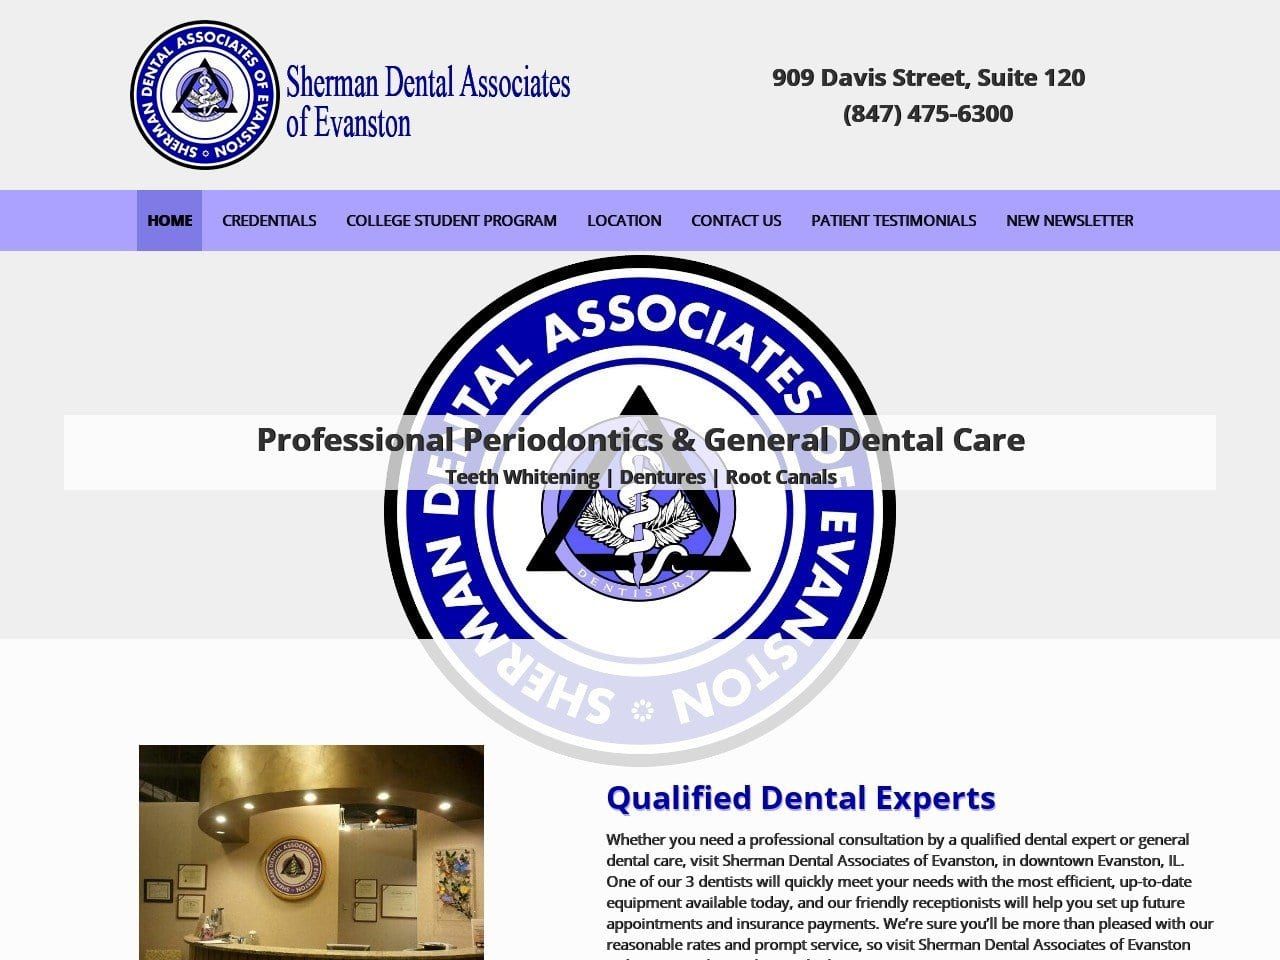 Sherman Dental Associates of Evanston Website Screenshot from shermandental.org